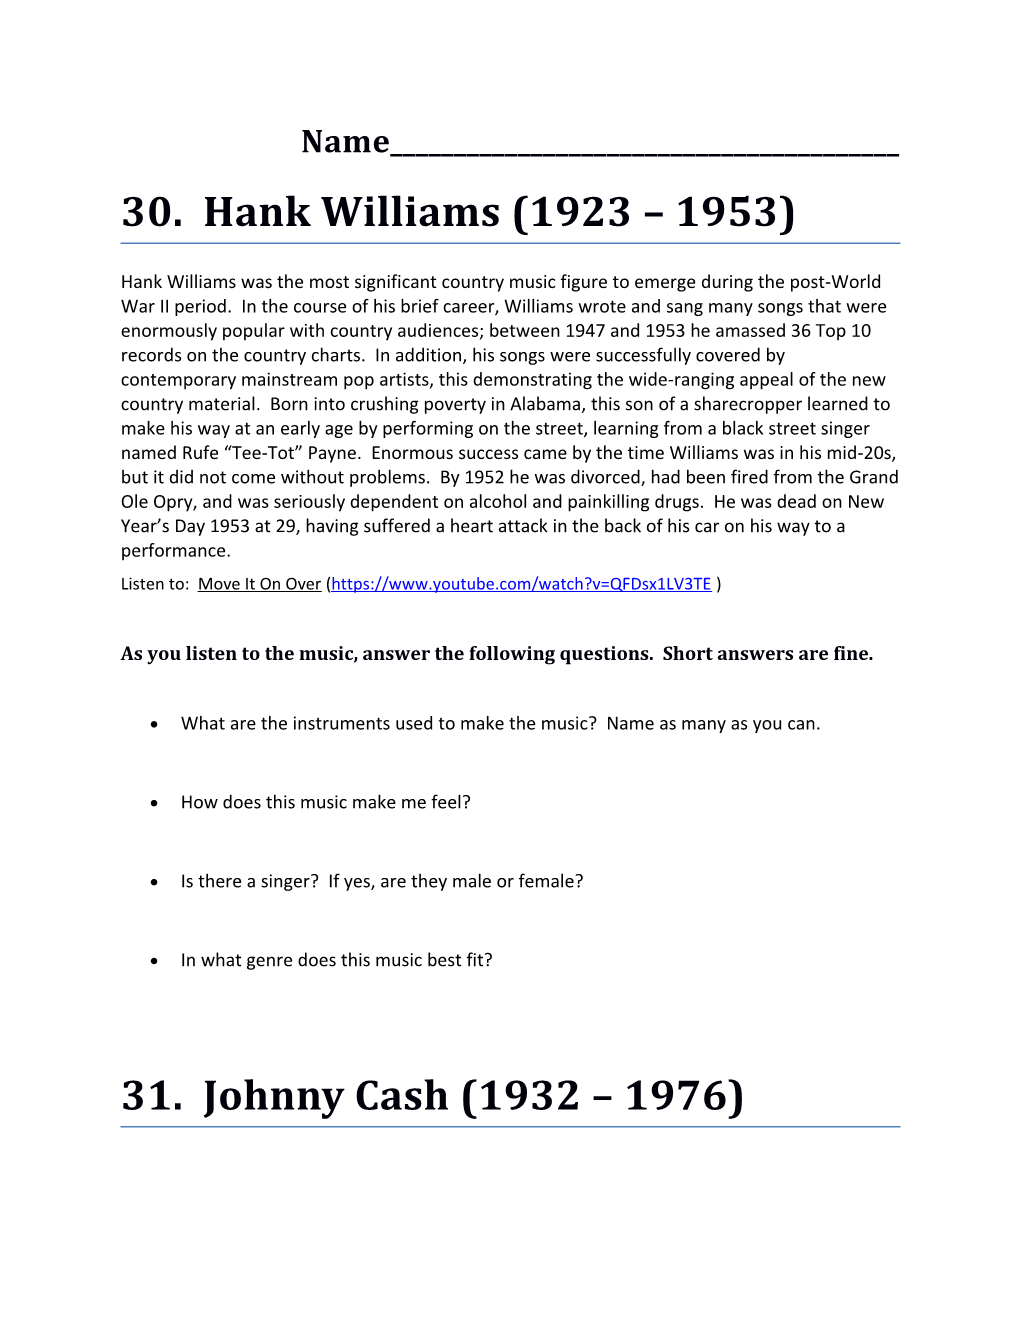 30. Hank Williams (1923 1953)